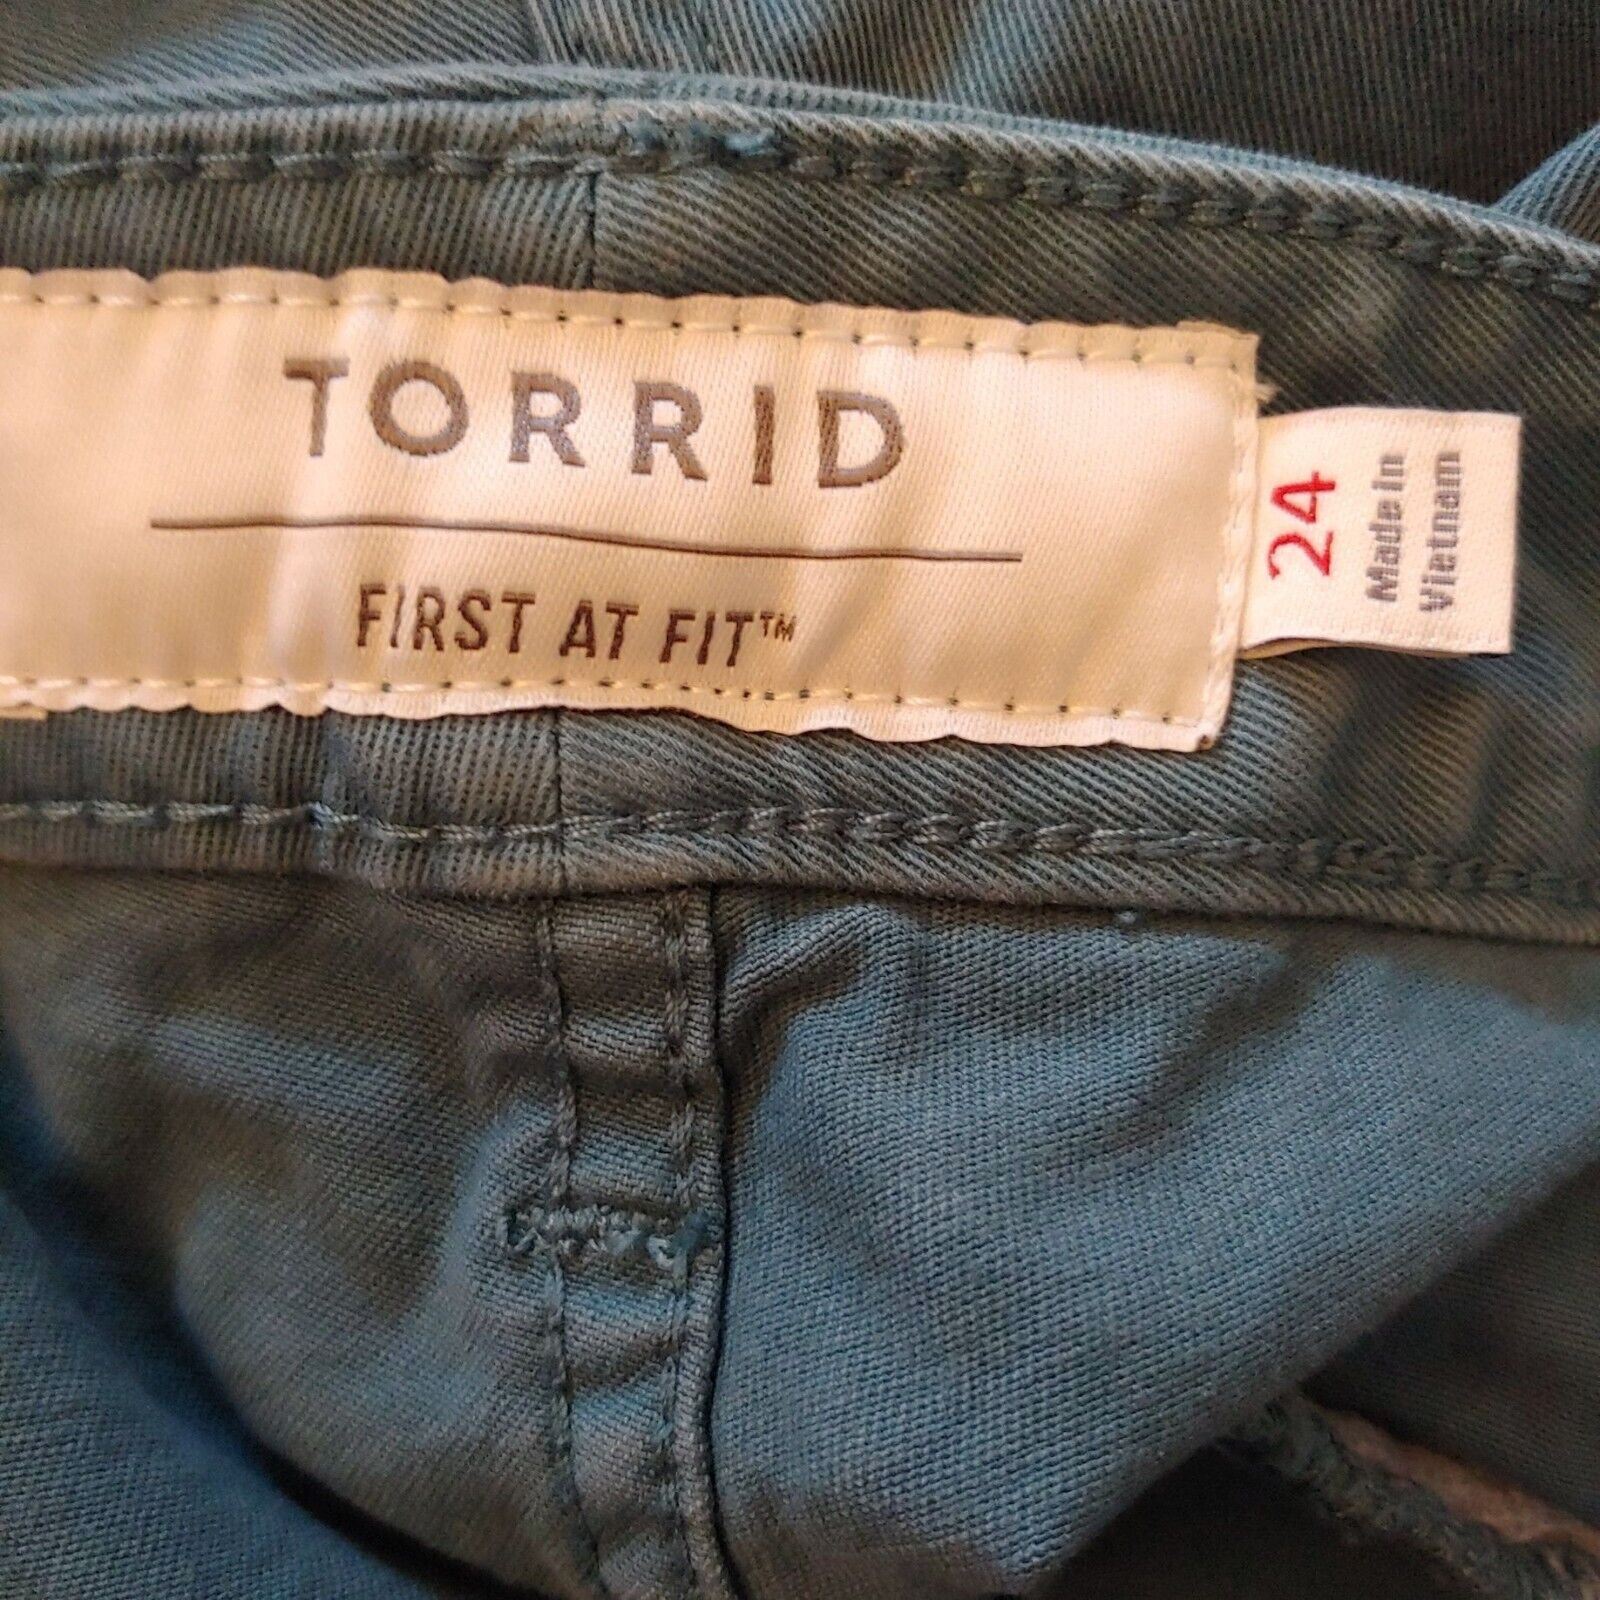 Torrid first at fit teal shorts torrid size 24 - image 7